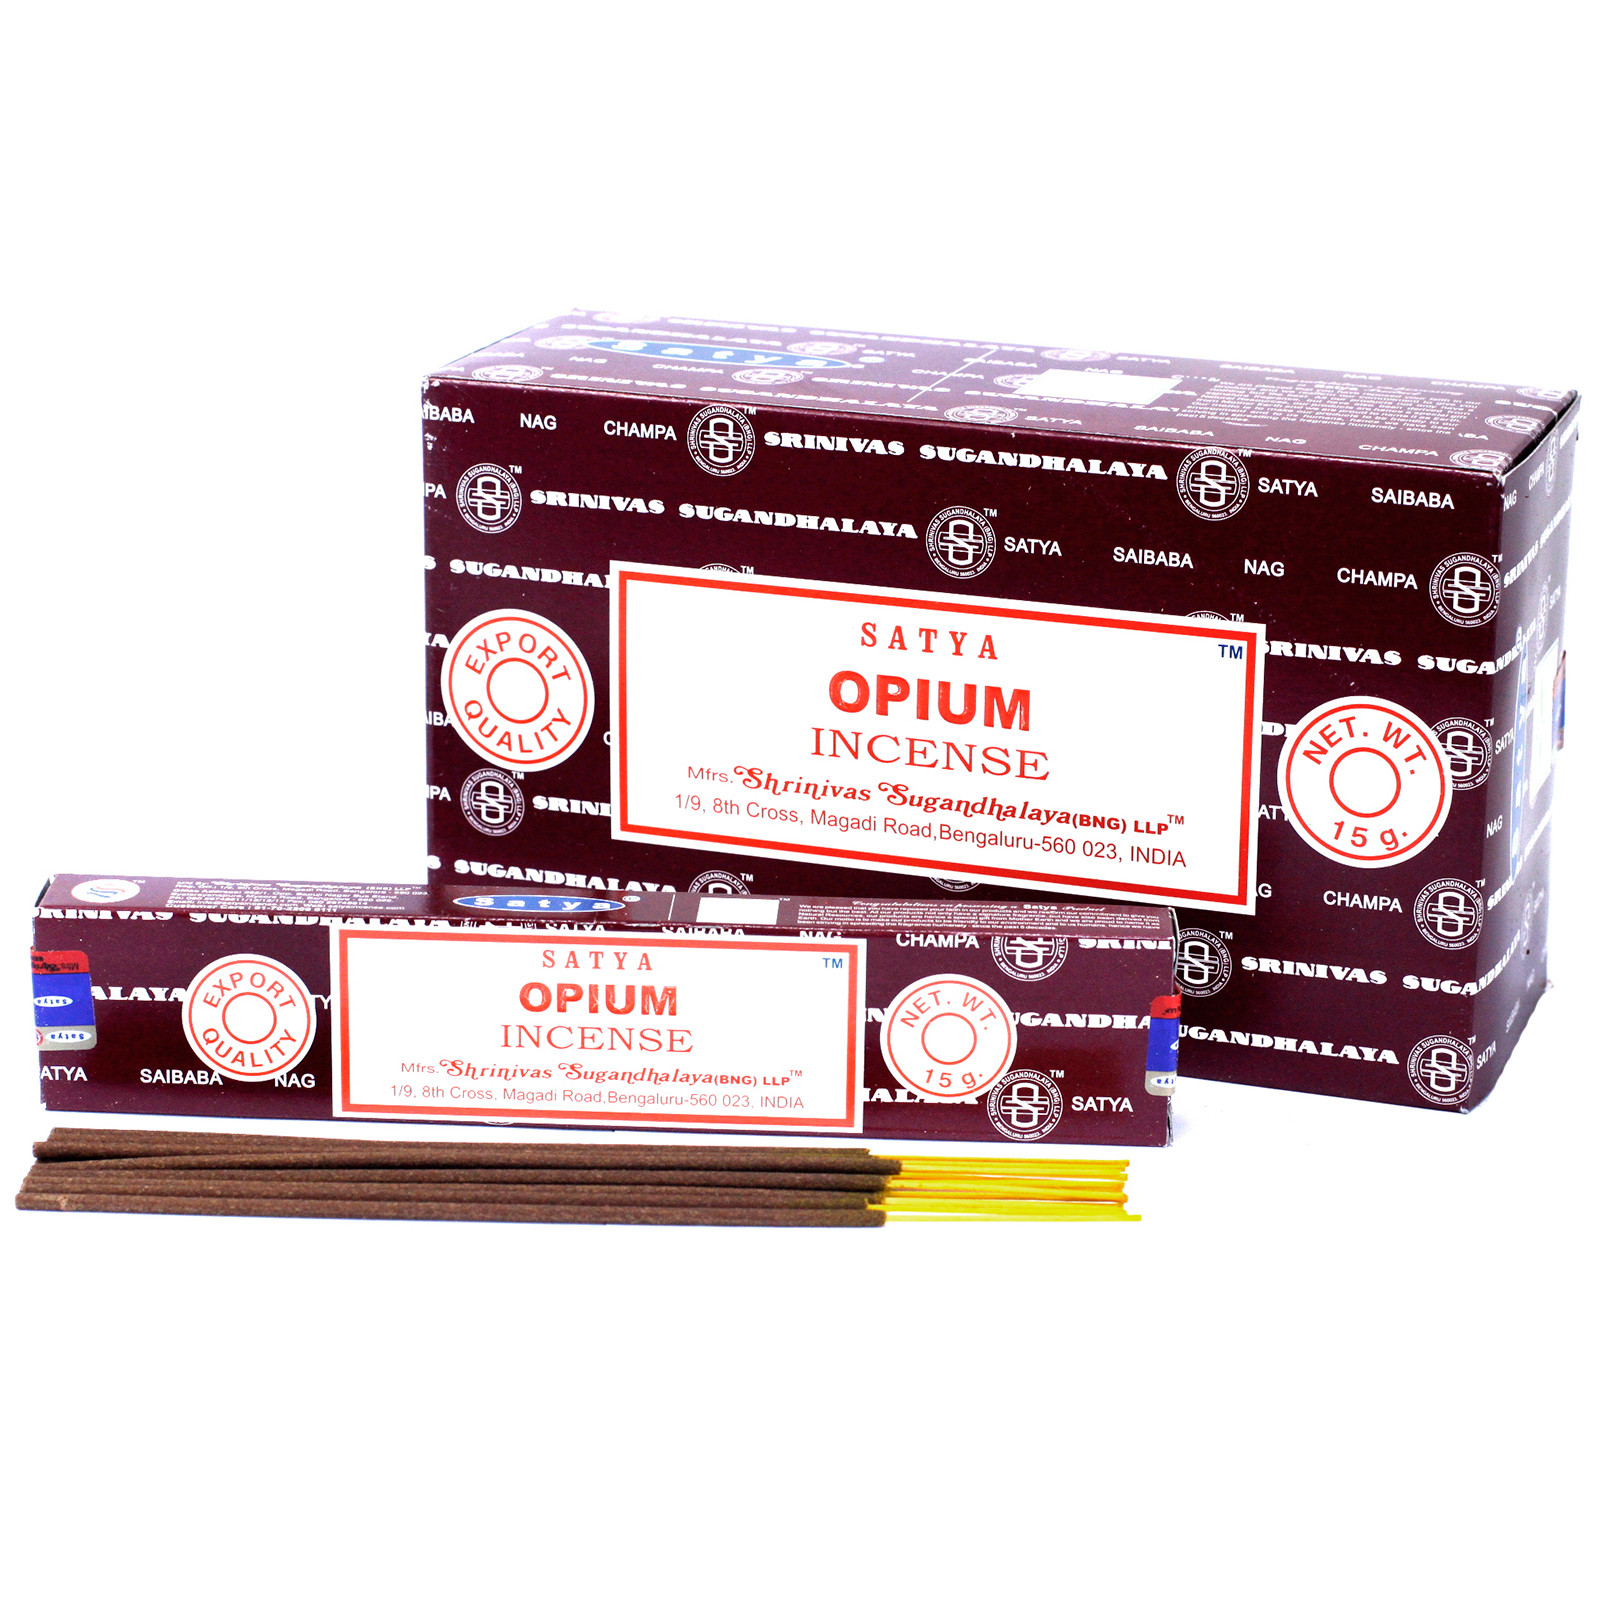 3 x 15g Packs Satya Incense Sticks - Opium